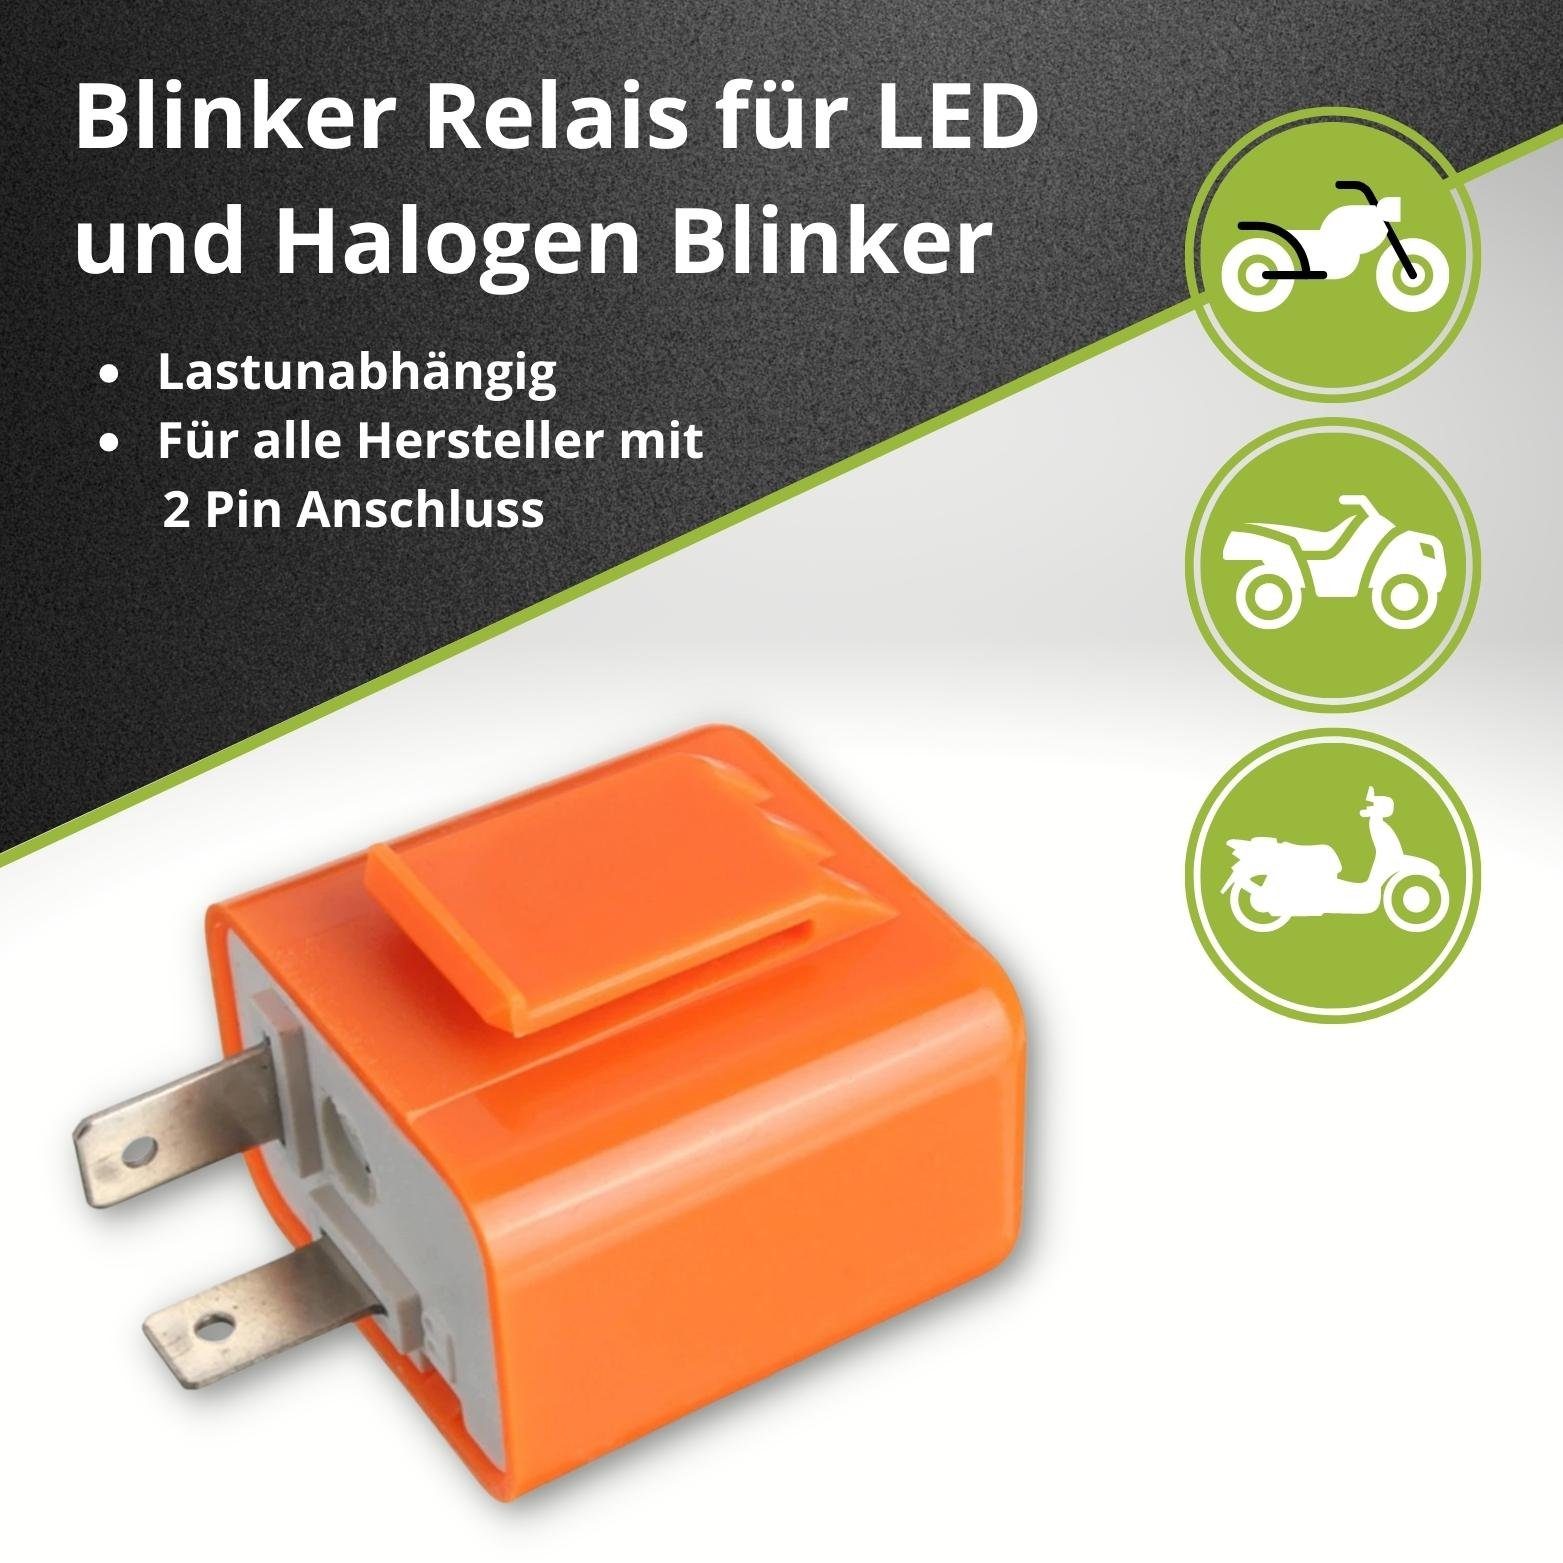 Blinkrelais 12V 2-polig für Standard, LED und Lauflichtblinker